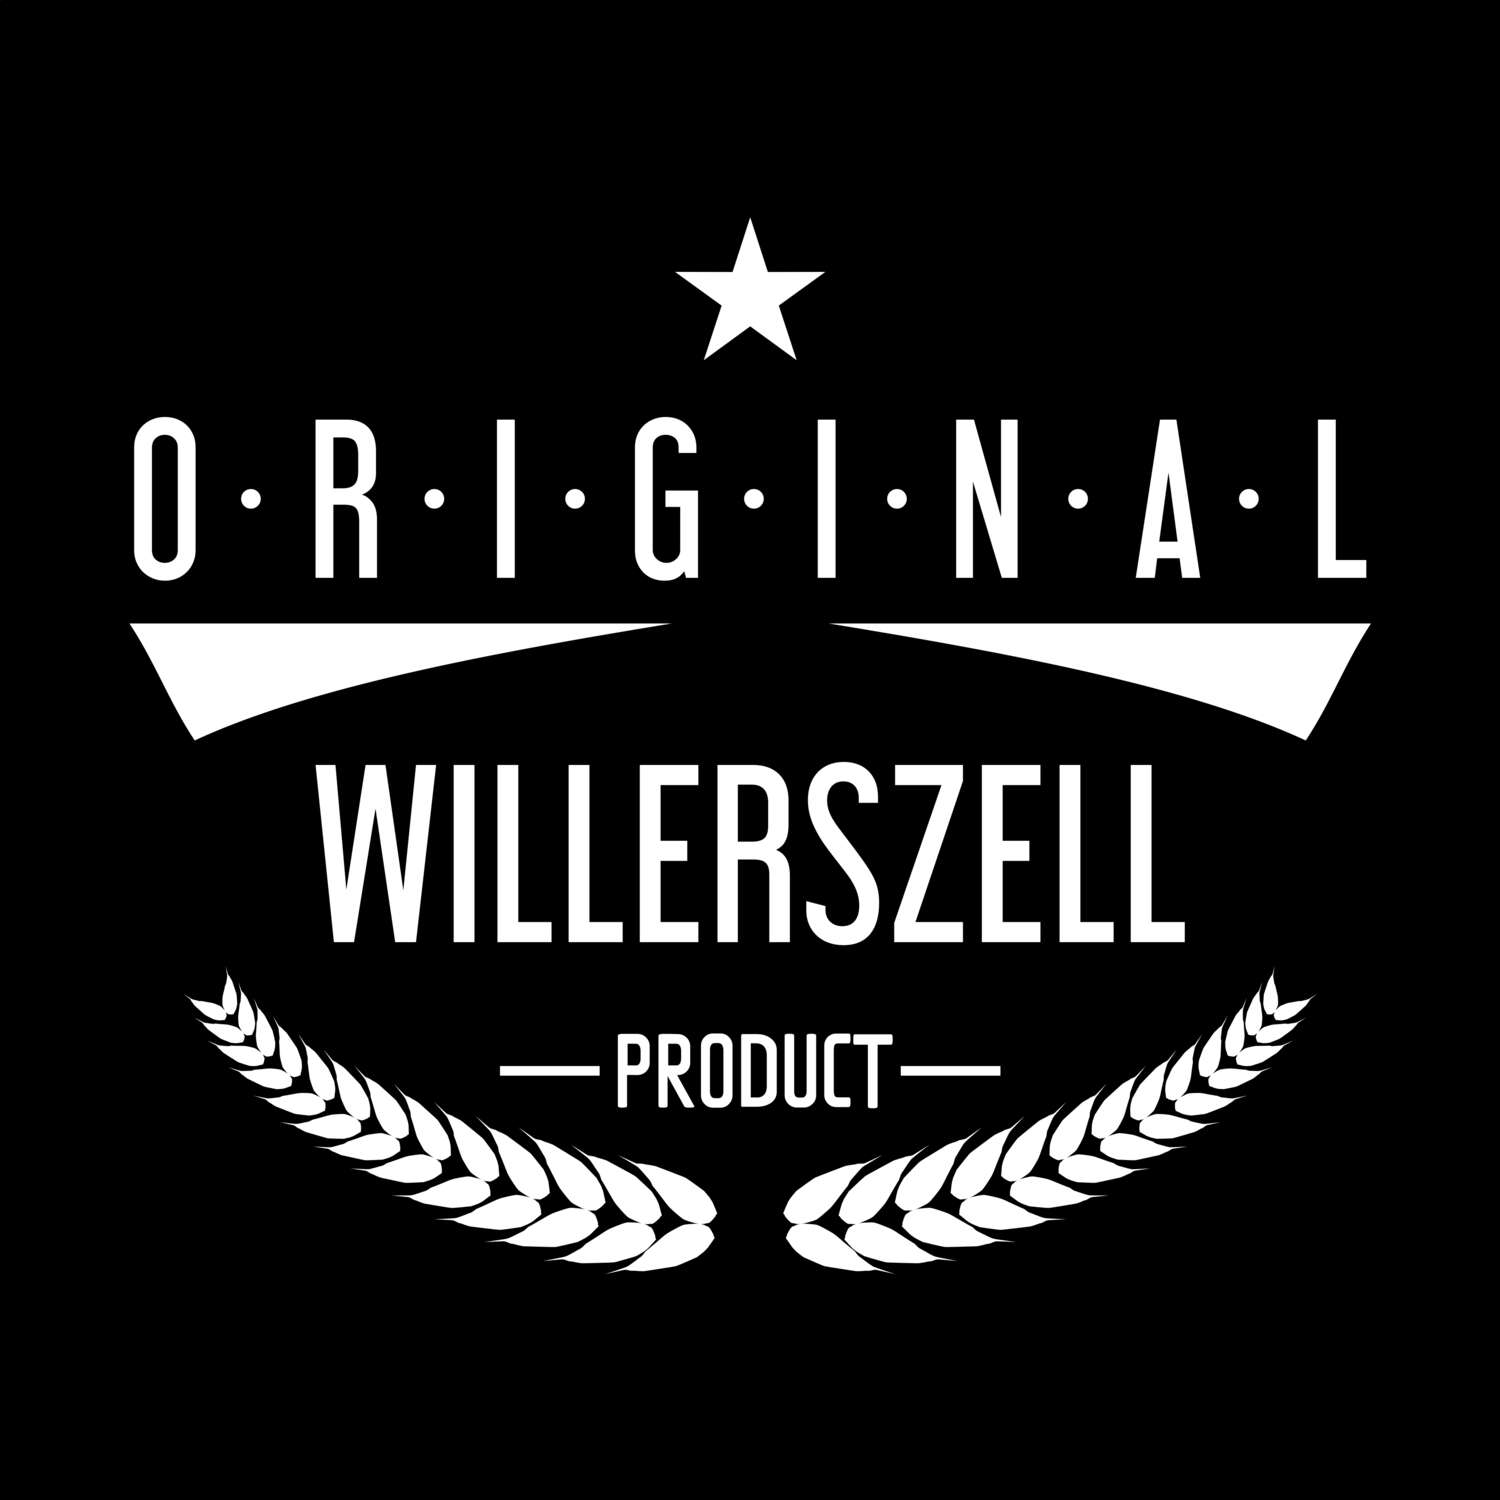 Willerszell T-Shirt »Original Product«